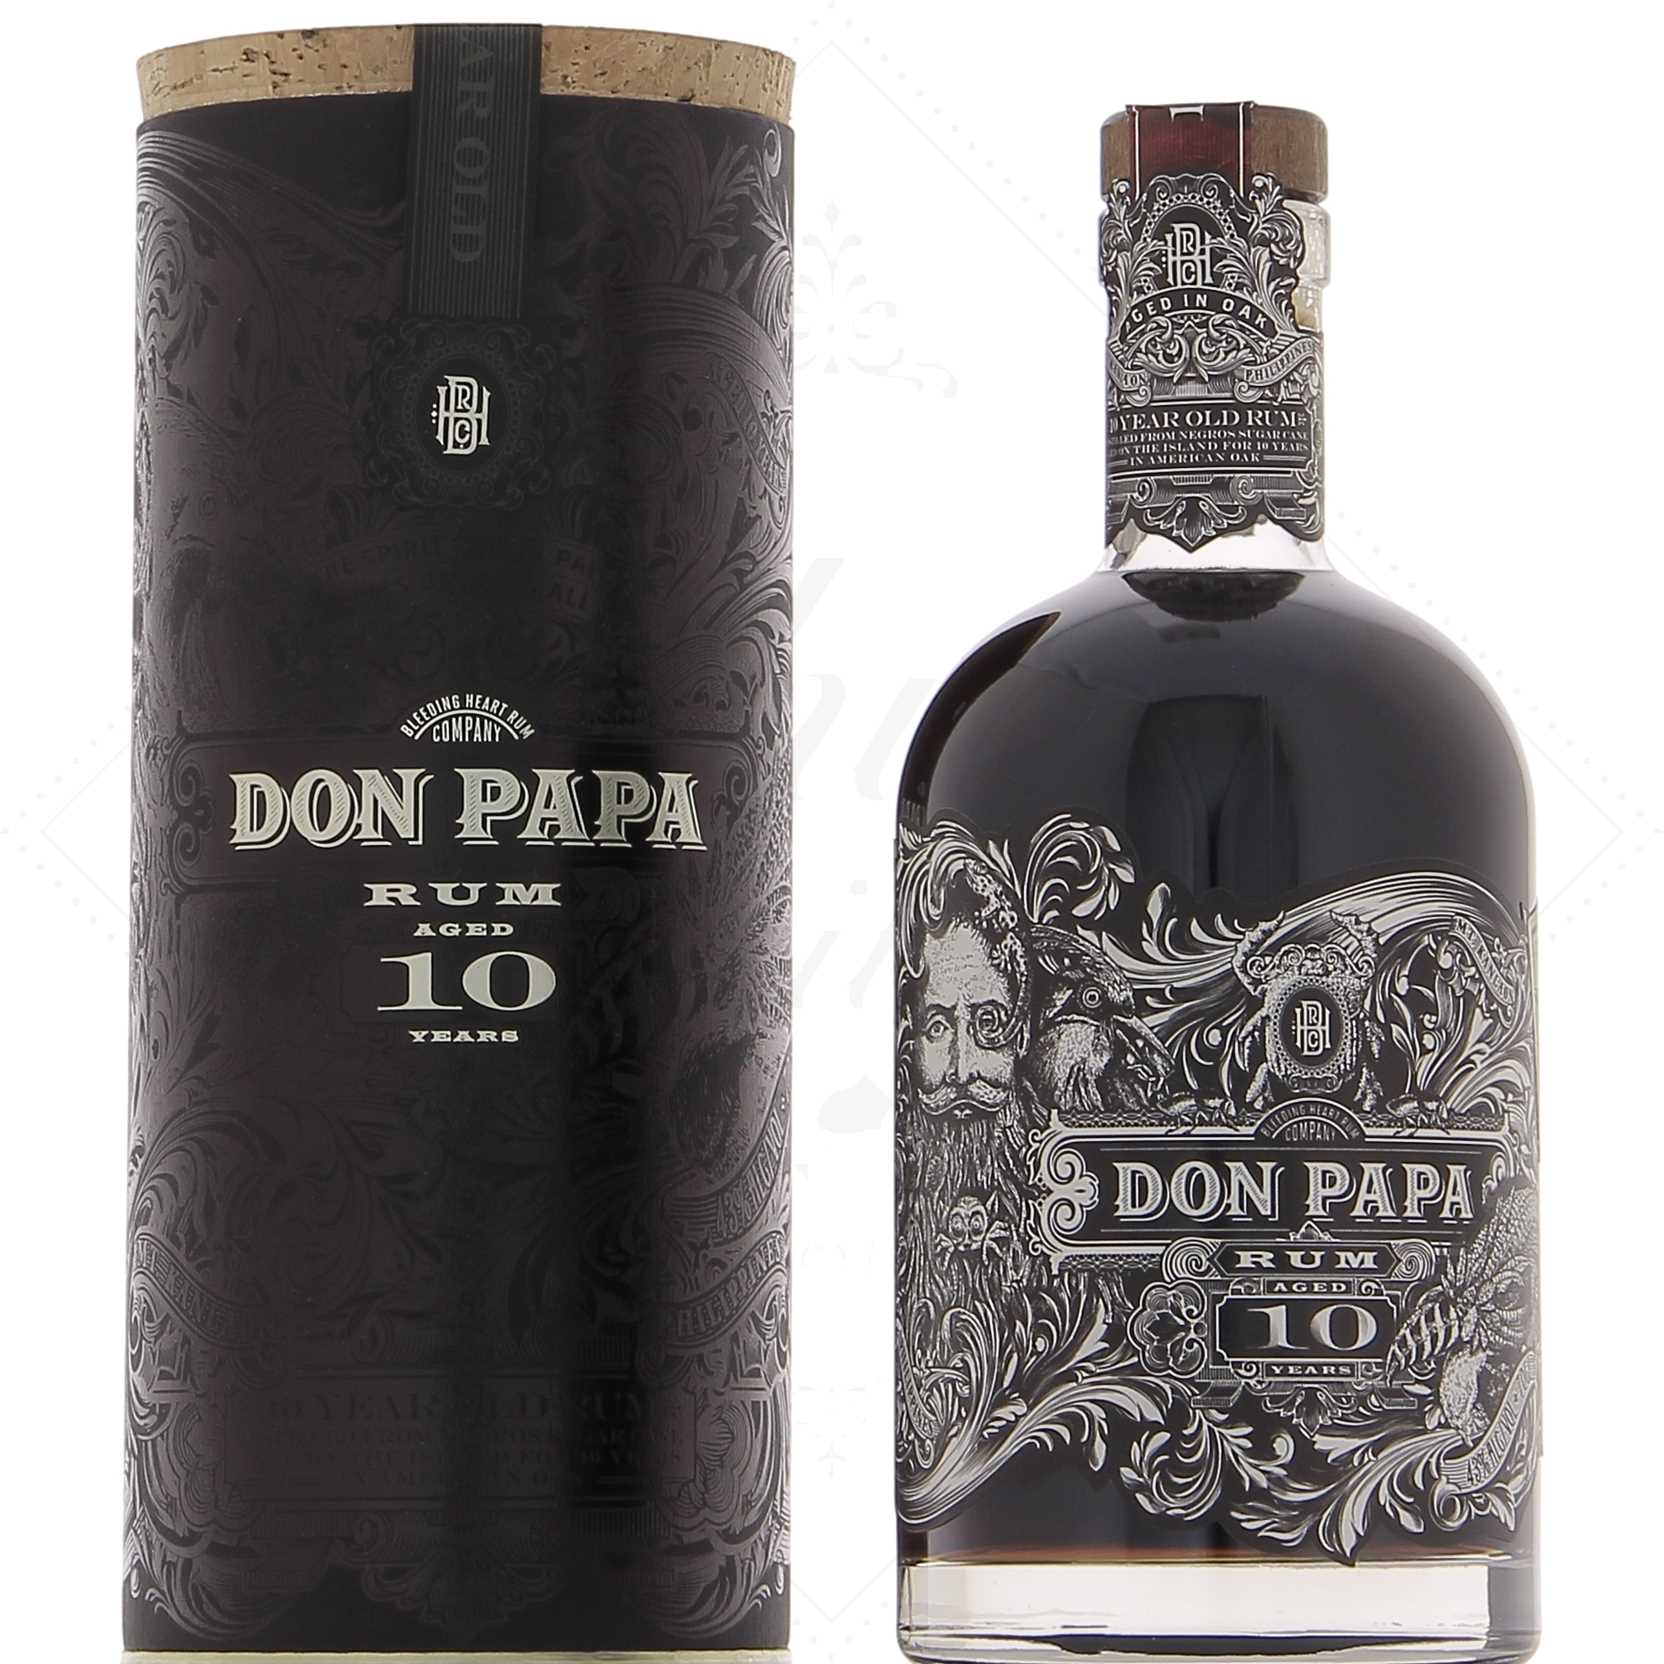 Don Papa 10 years (limited edition) 43° - Rhum Attitude